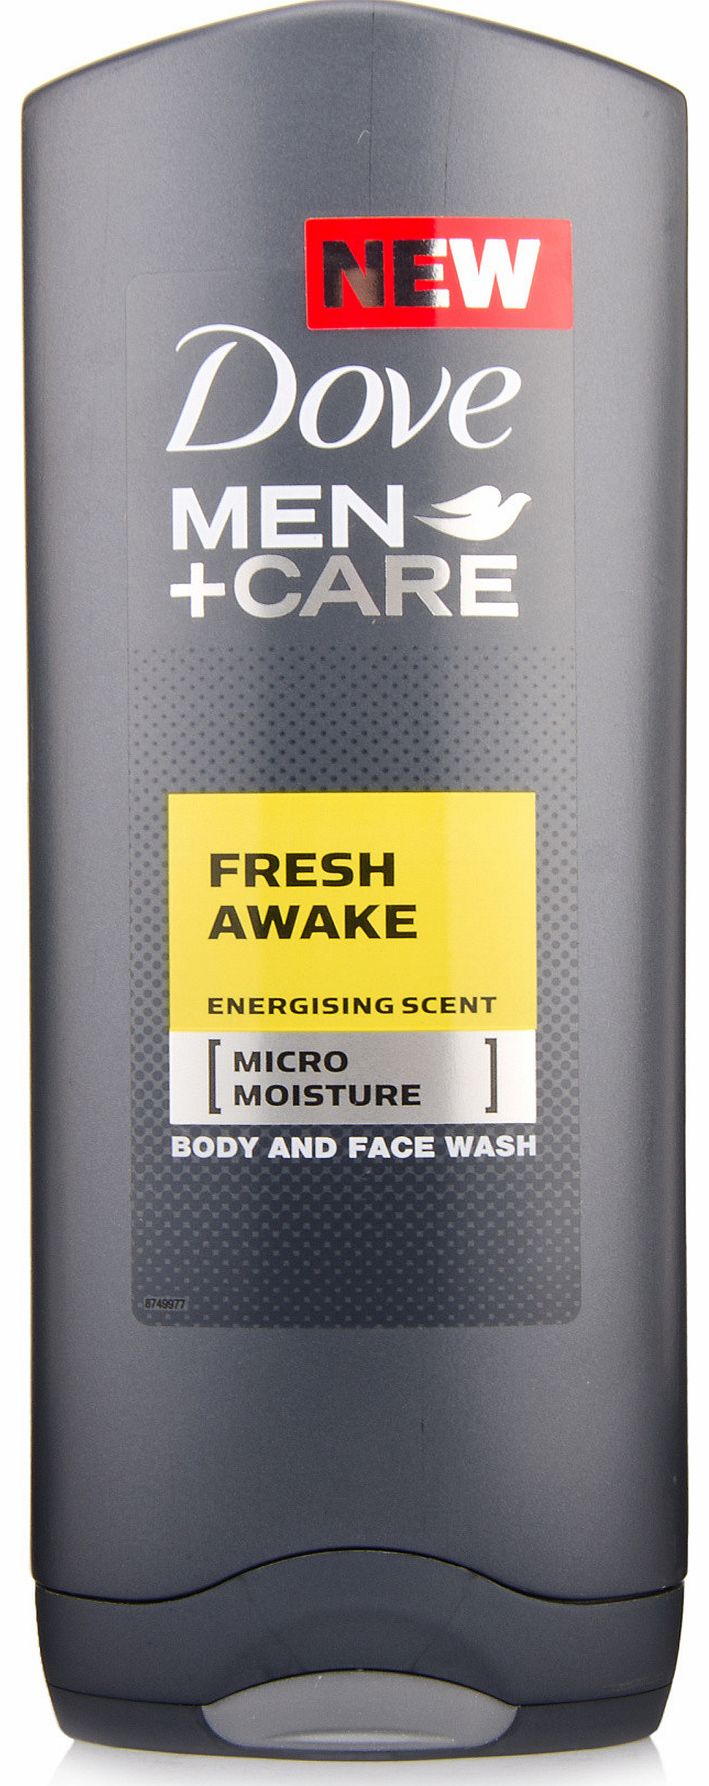 Men+Care Fresh Awake Body and Face Wash